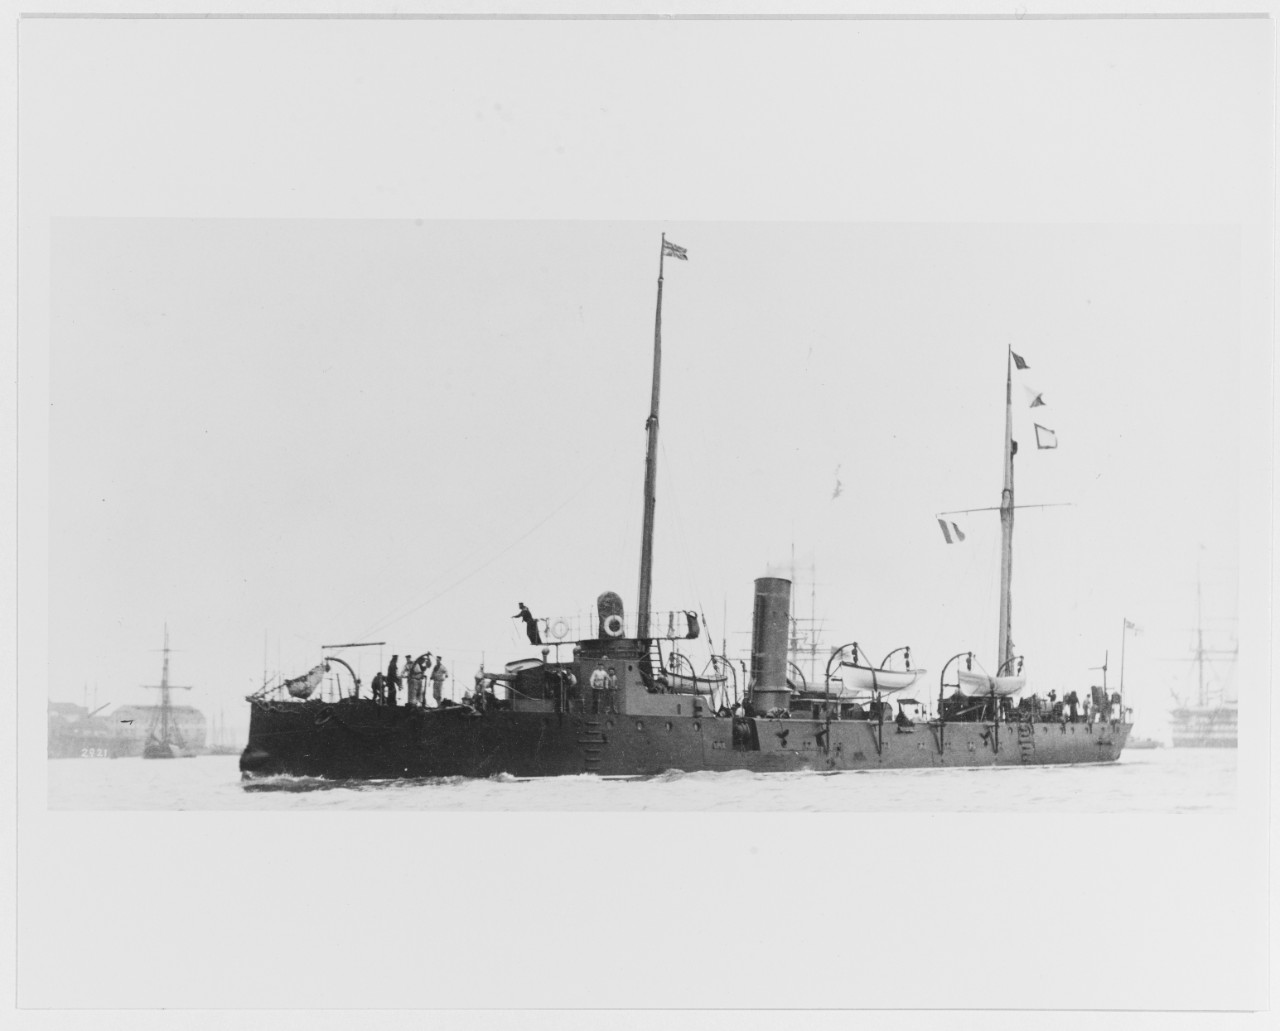 RATTLESNAKE (British torpedo gunboat, 1886-1910)